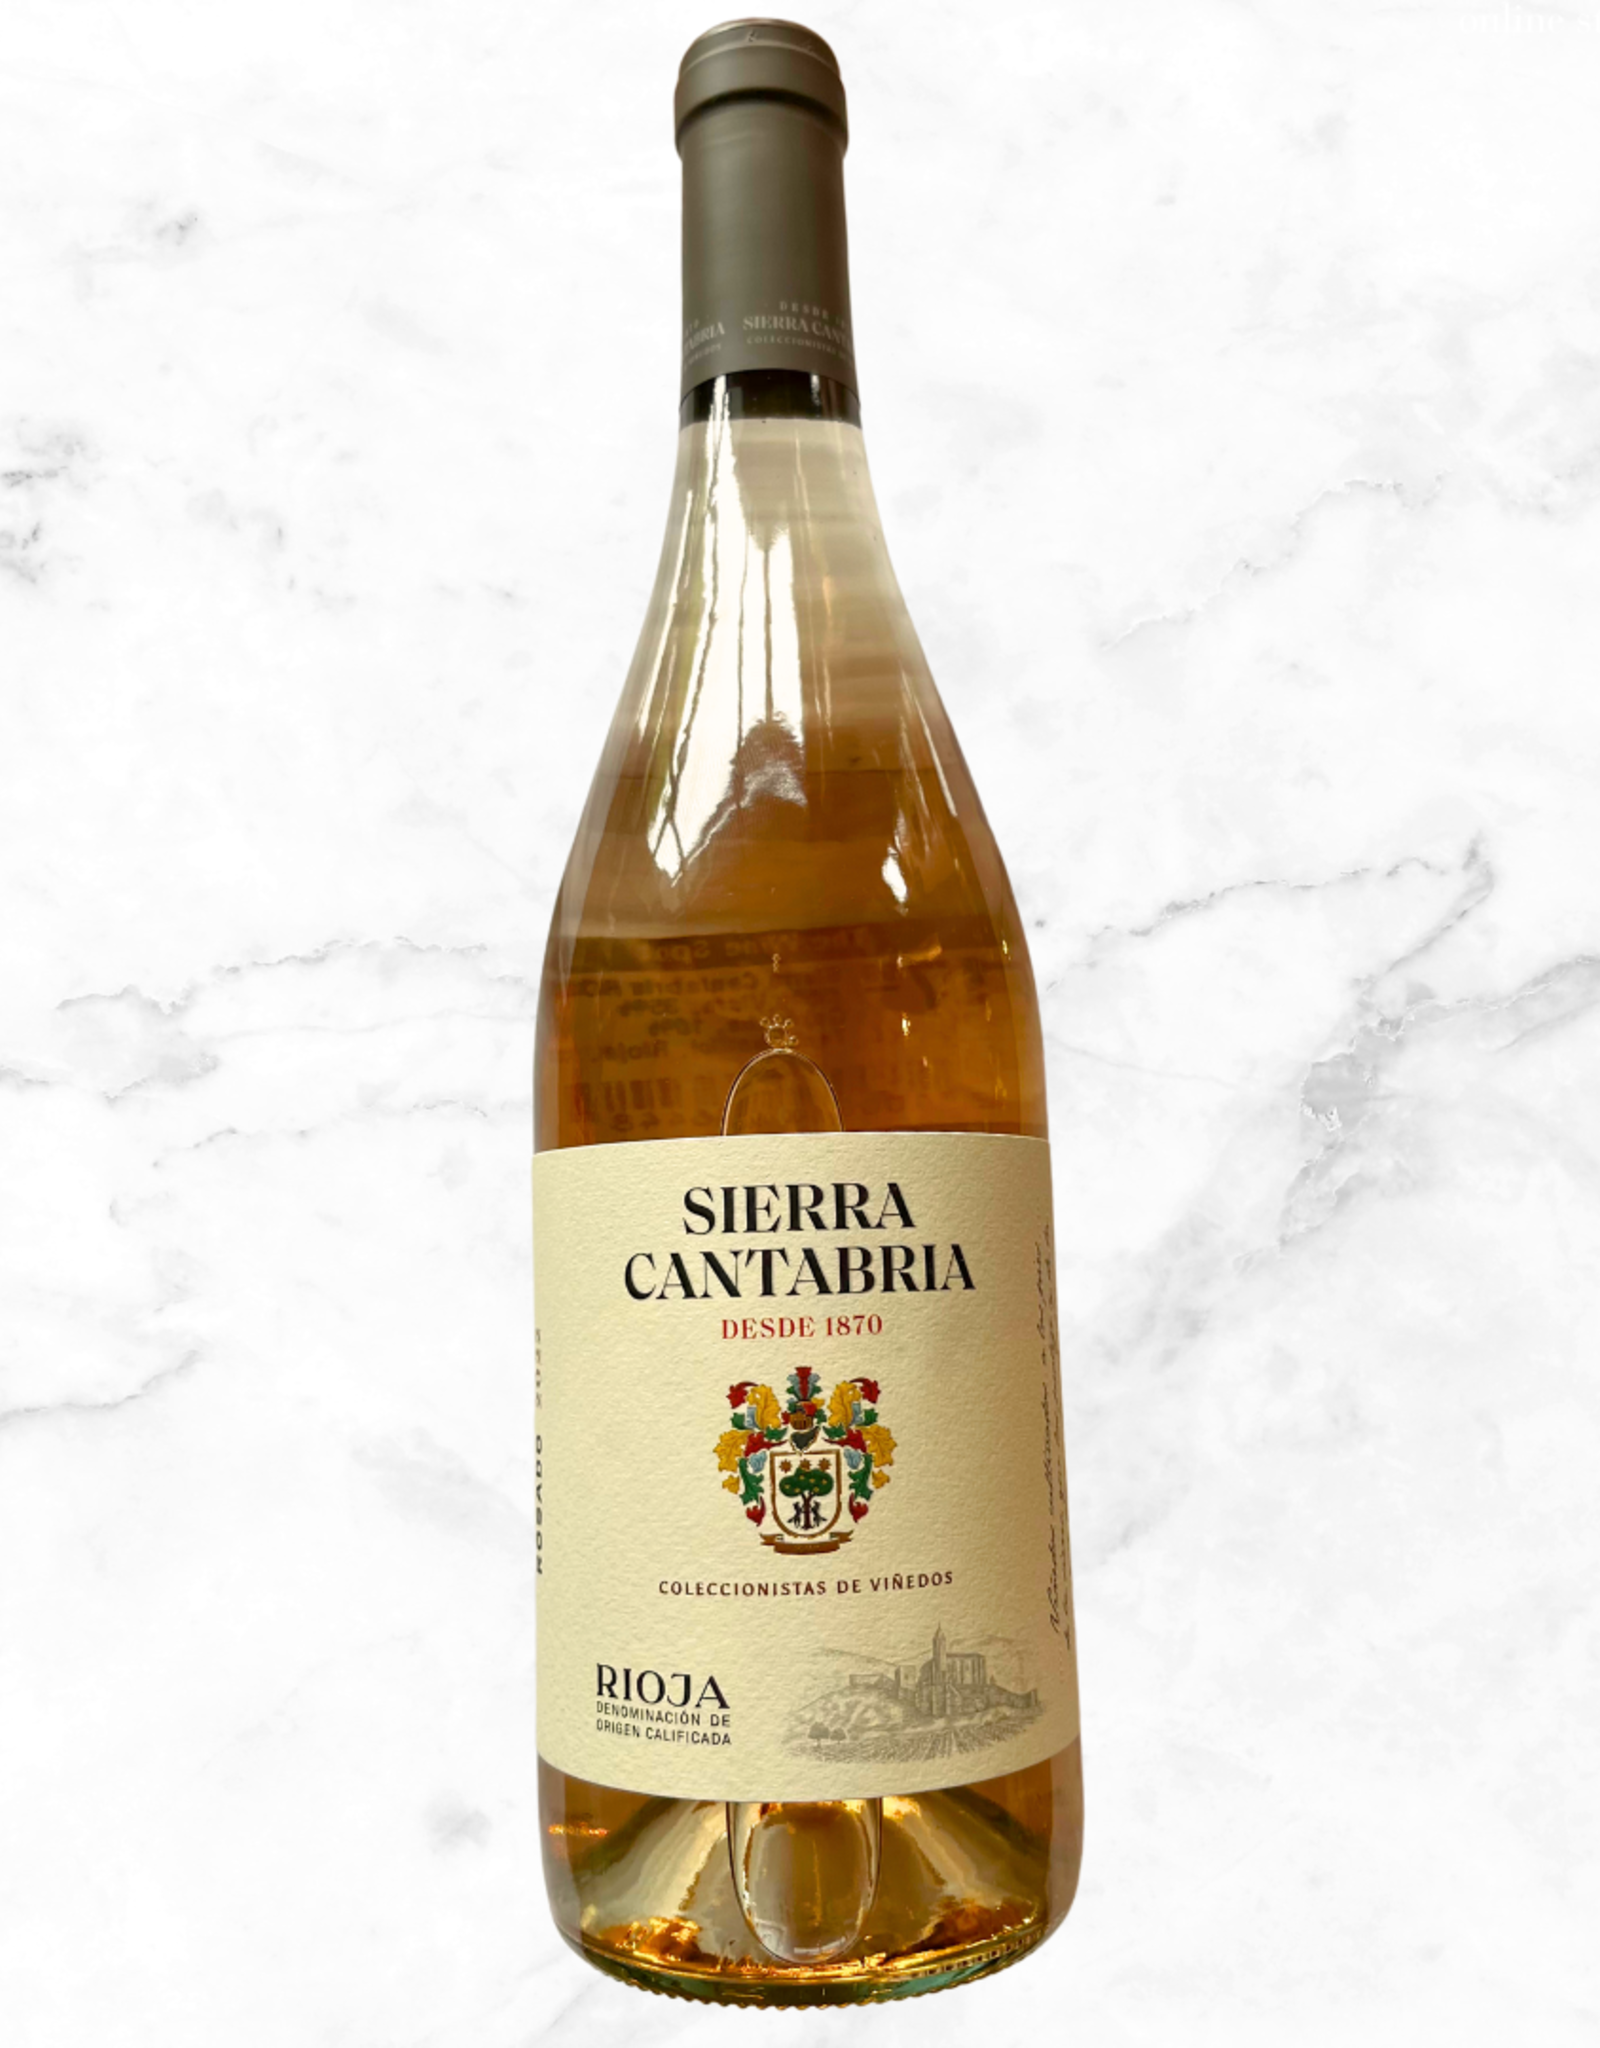 Sierra Cantabria Rosé (55% Viura, 35% Garnacha, 10% Tempranillo), Rioja, Spain